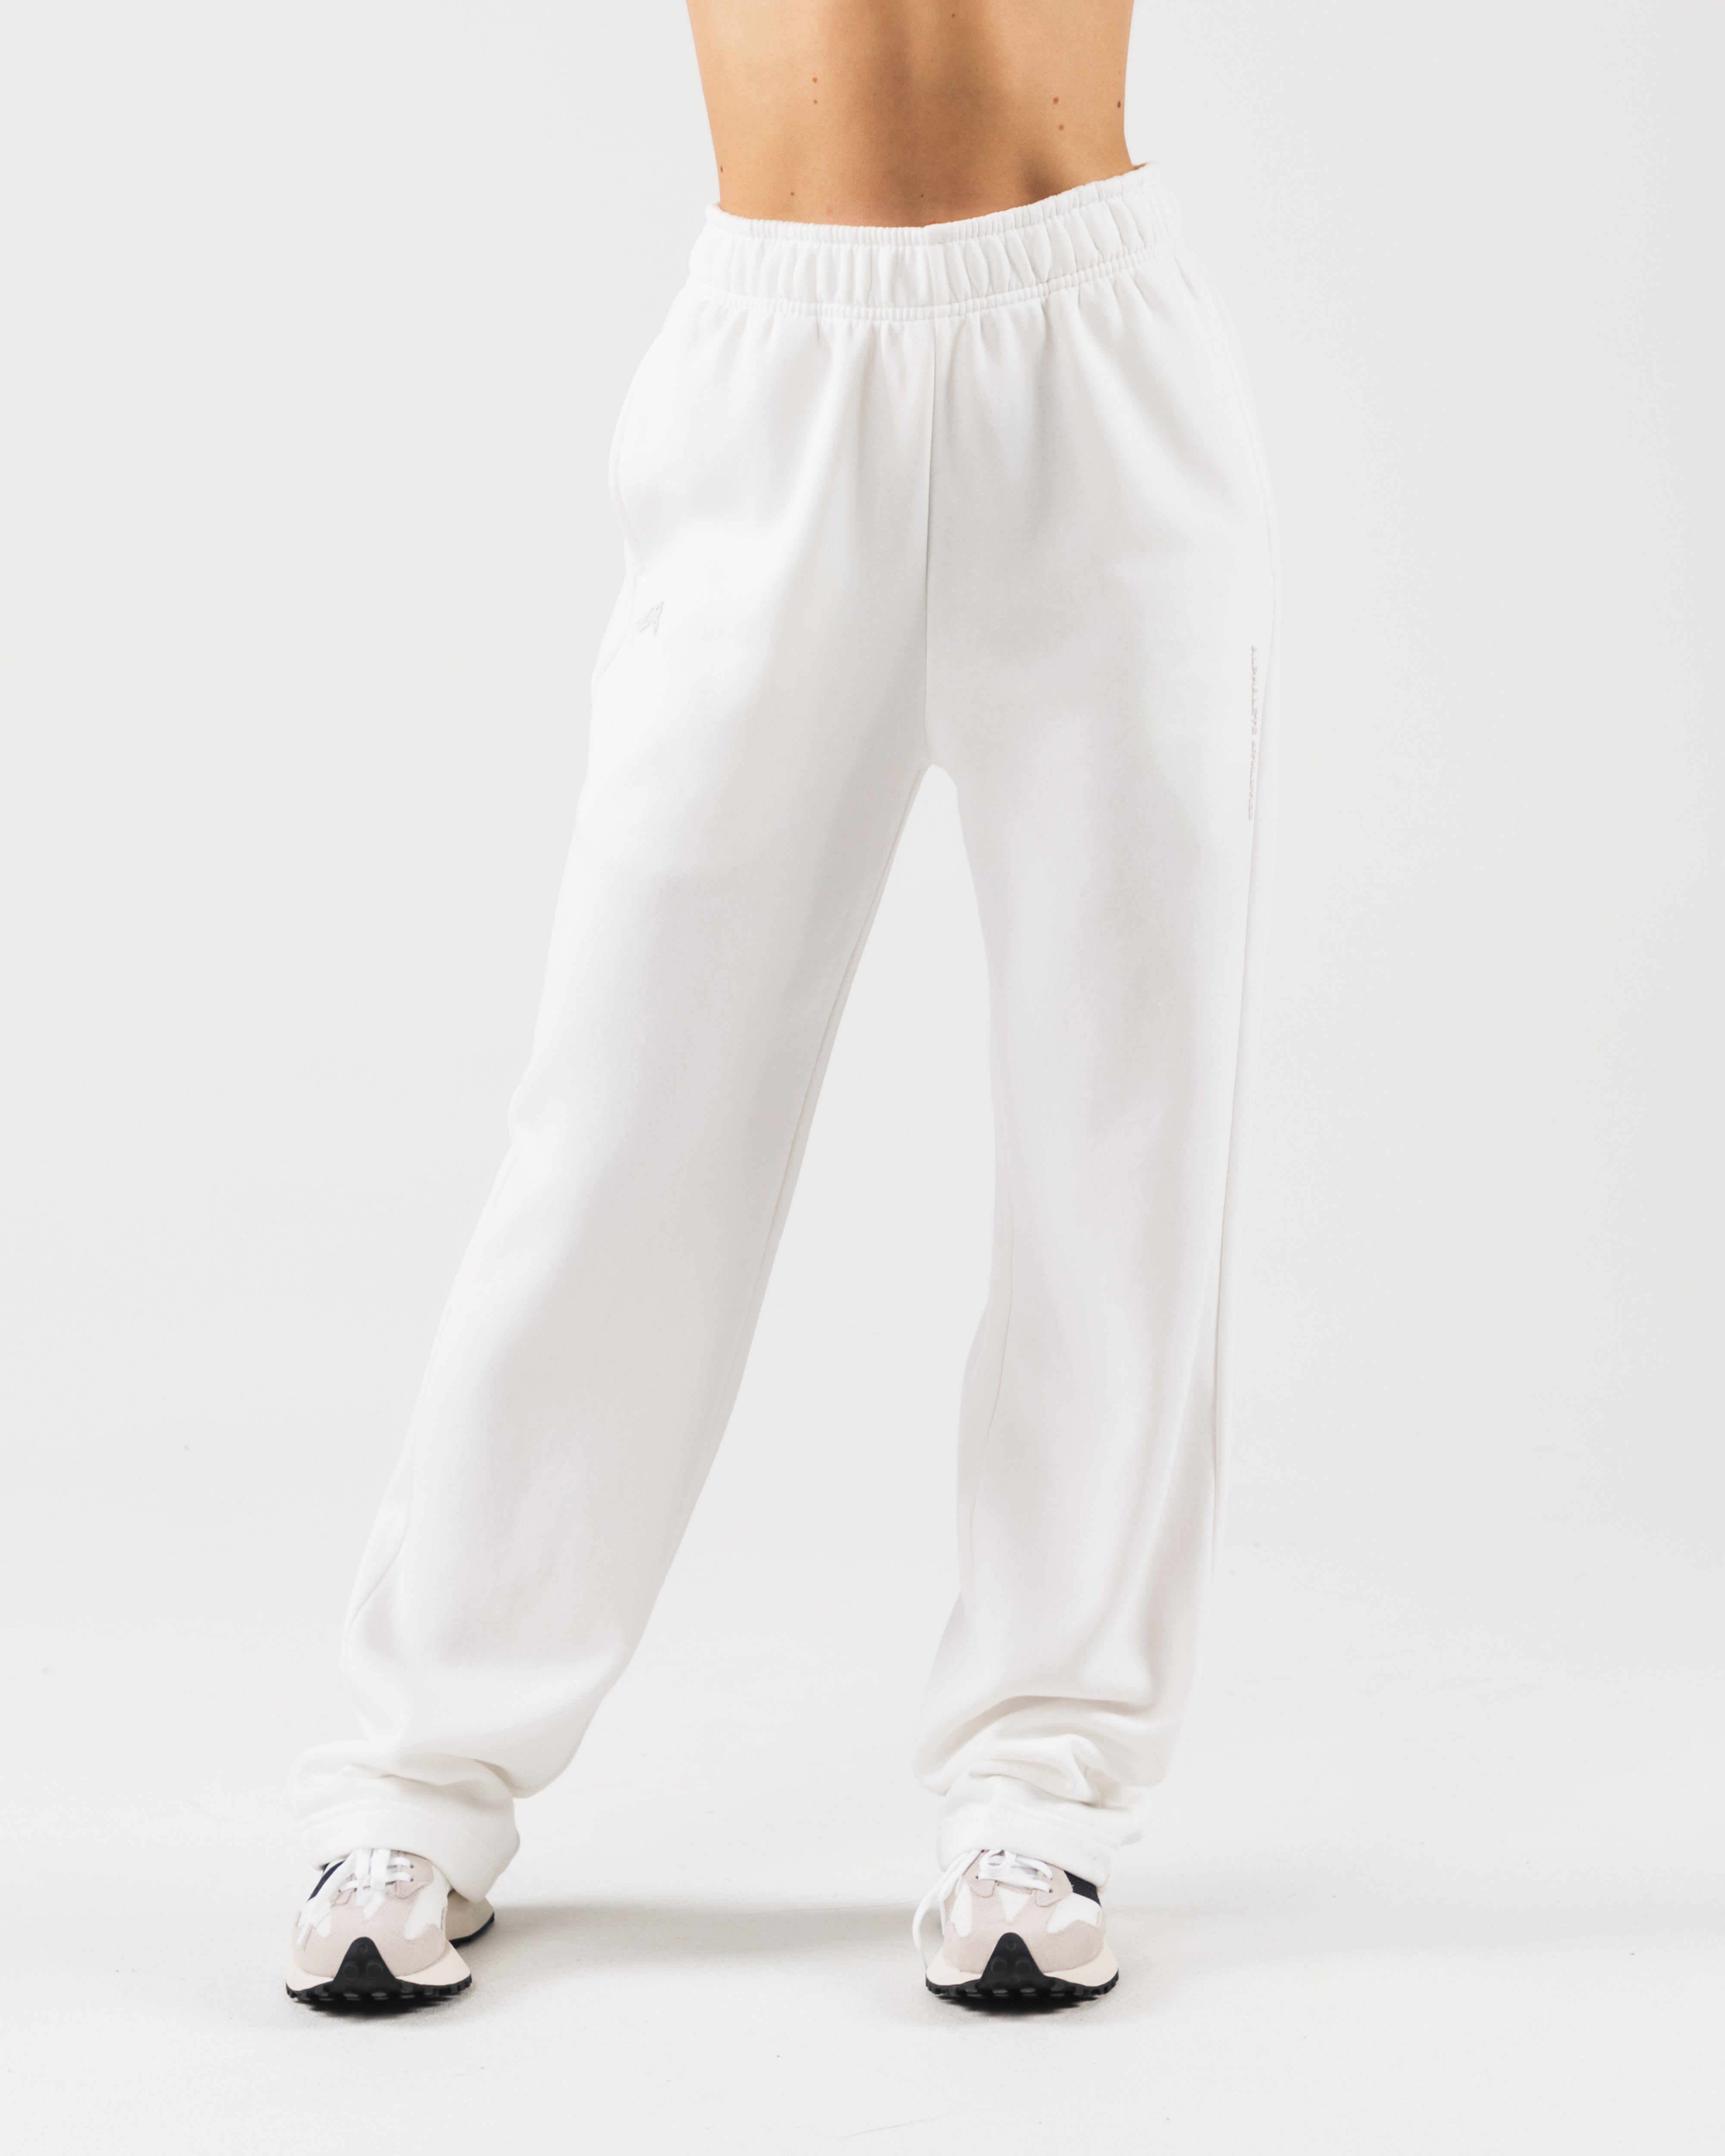 ALPHALETE BN Joggers Size M - White, Women's Fashion, Activewear on  Carousell